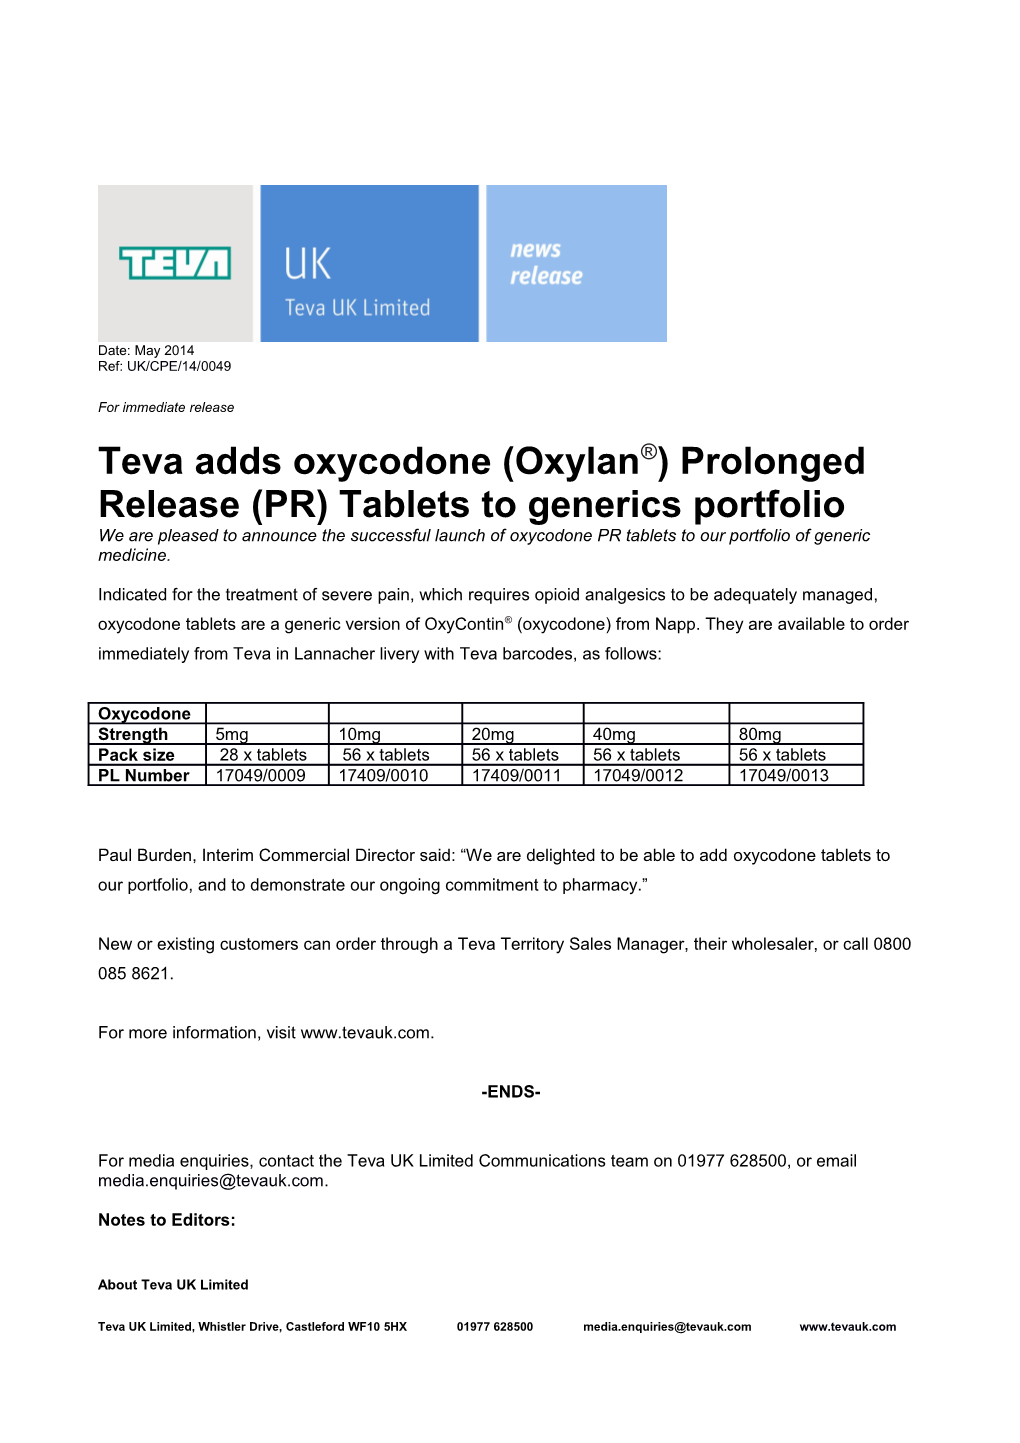 Teva Adds Oxycodone (Oxylan ) Prolonged Release (PR) Tablets to Generics Portfolio